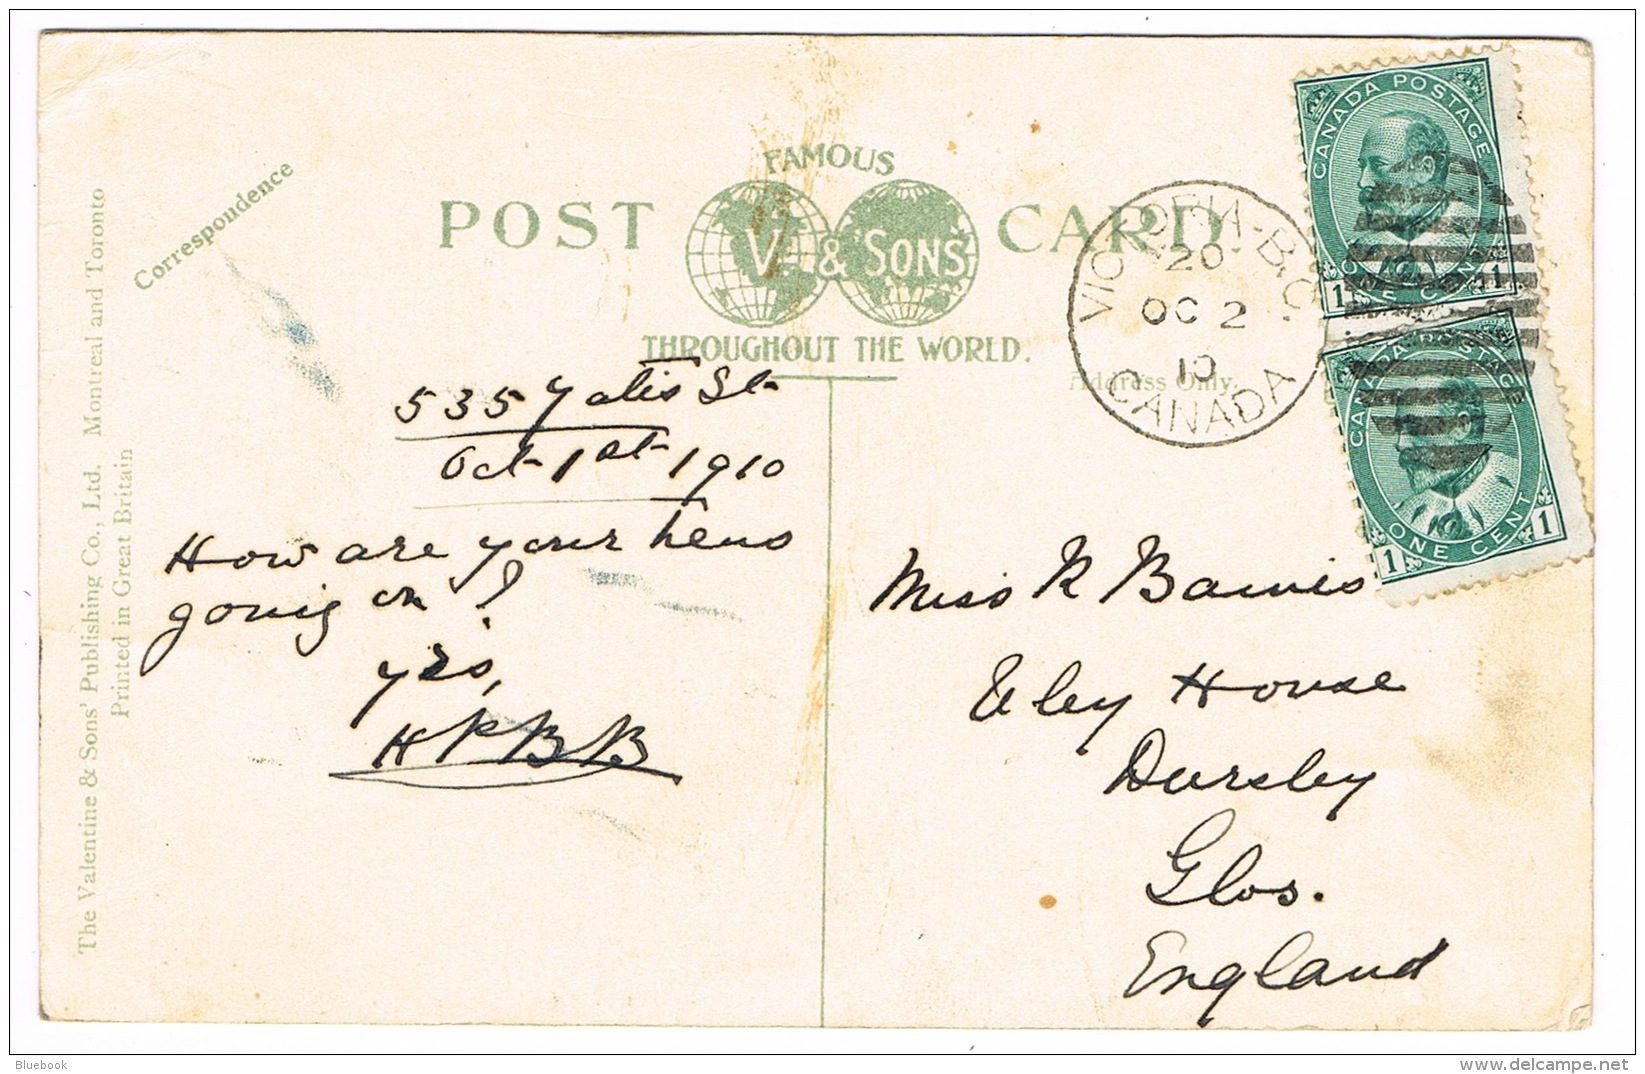 RB 1164 - 1910 Postcard - Beacon Hill Park Victoria British Columbia Canada 2c Rate To UK - Good Victoria Postmark - Victoria